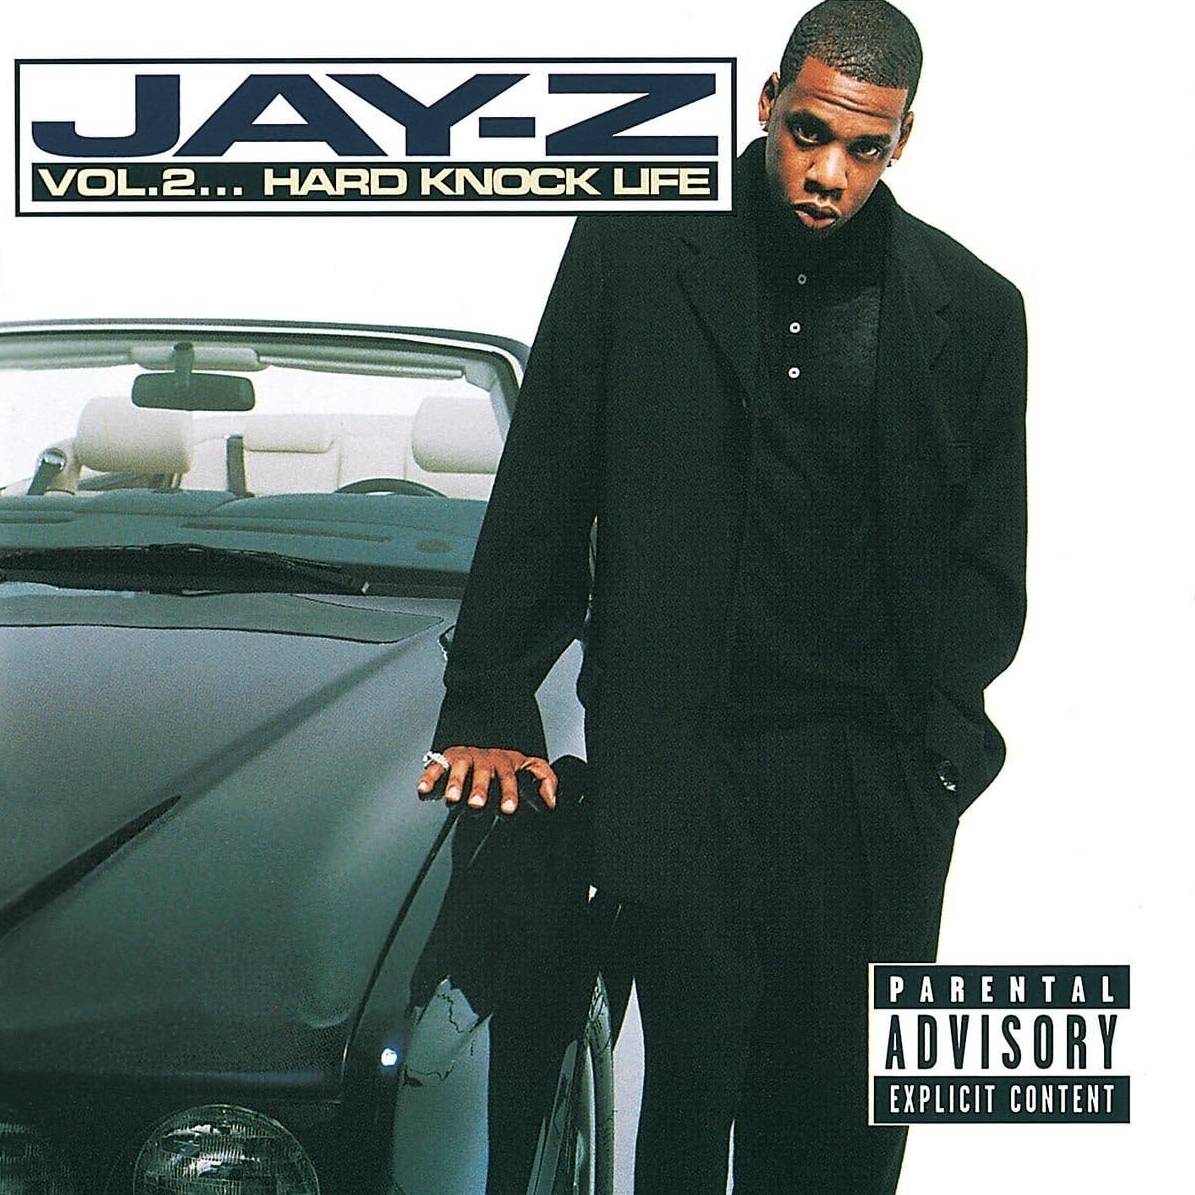 audio review : Volume 2 [ Hard Knock Life ] ... Jay-Z